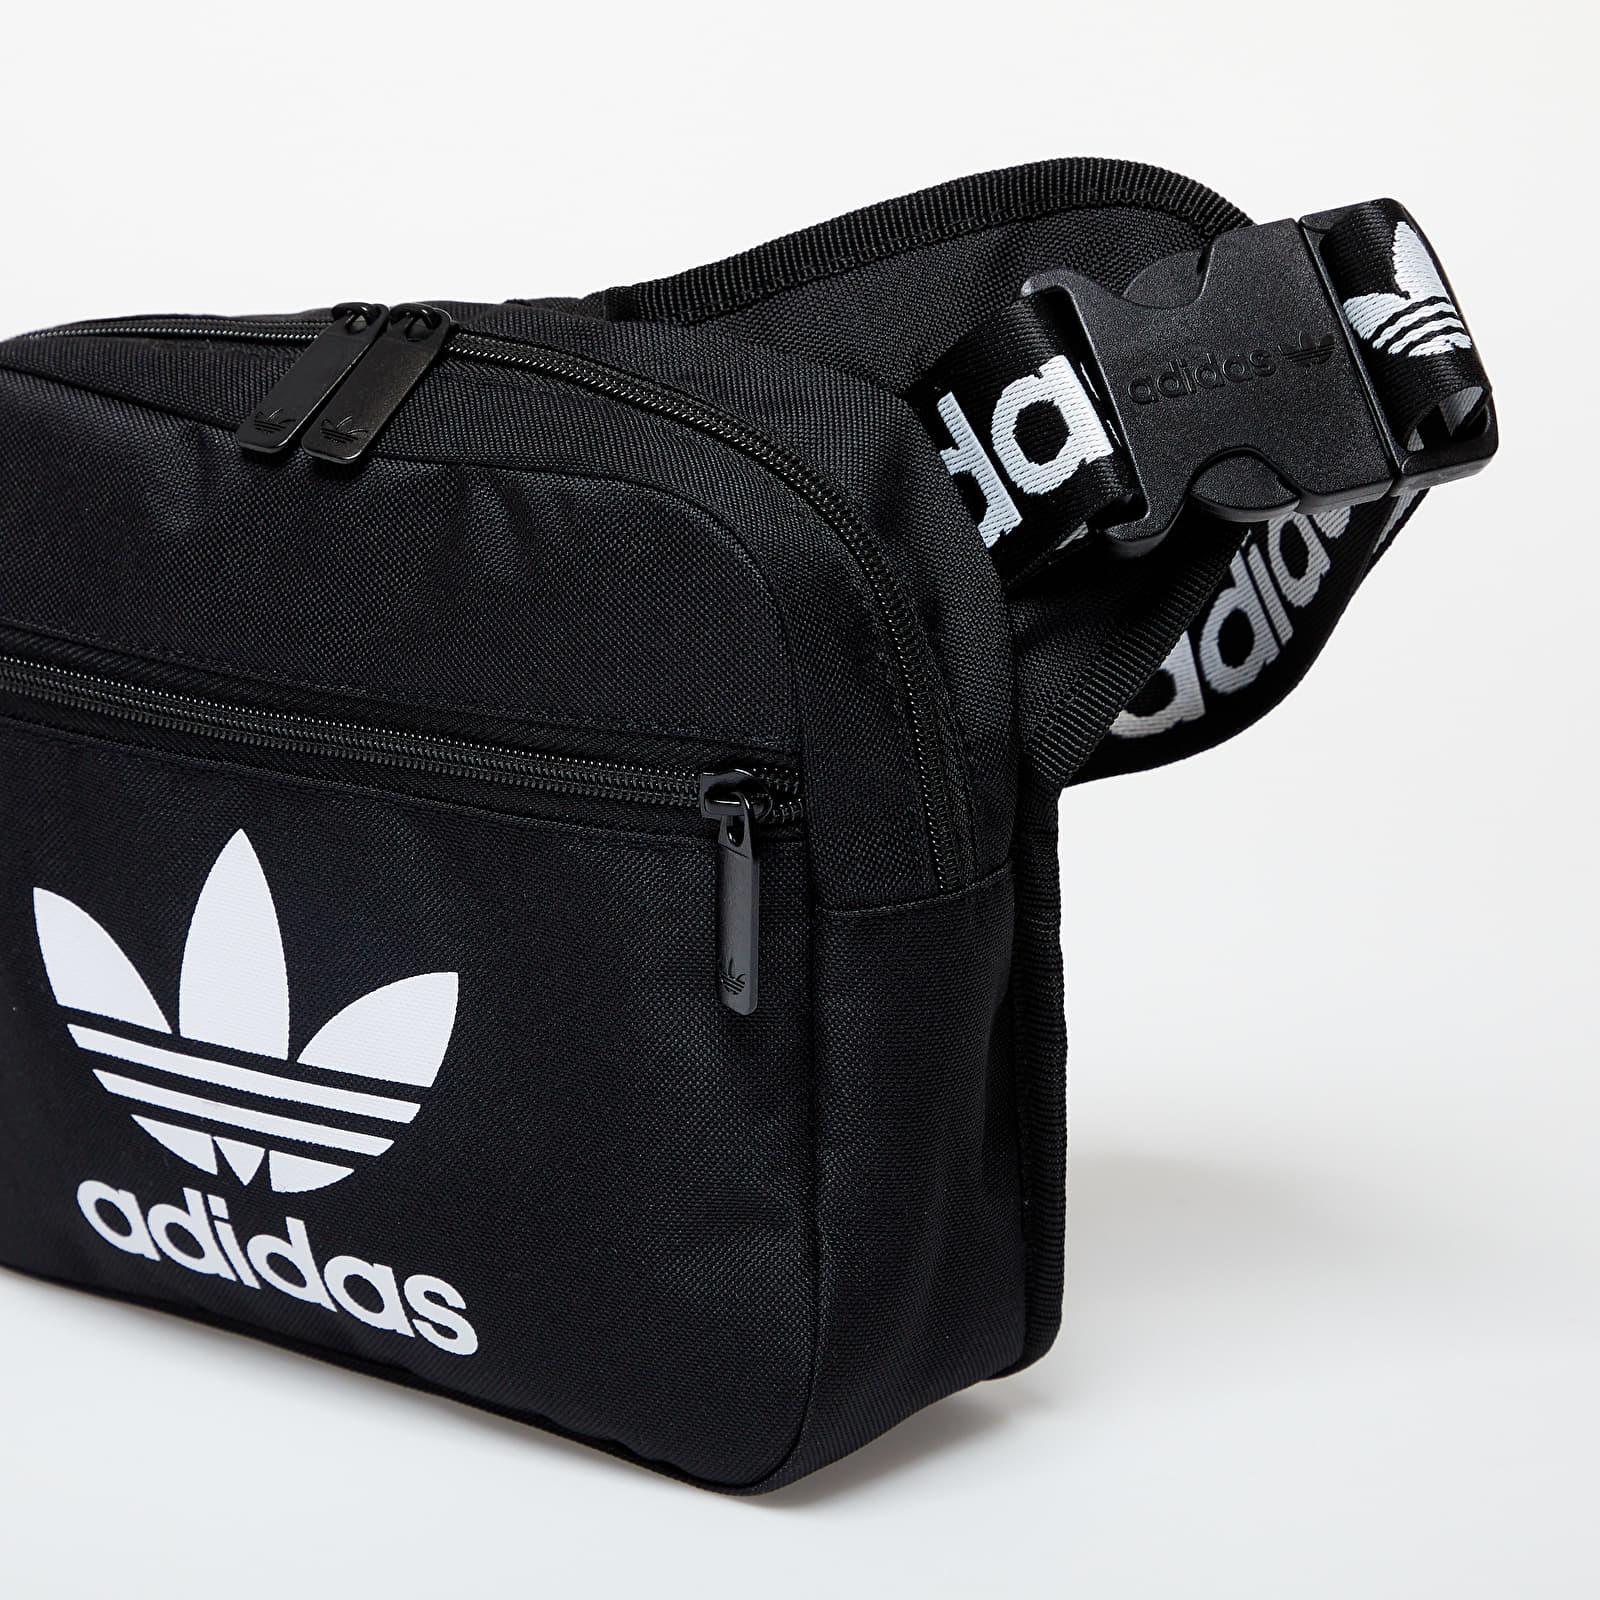 Bag adidas sling Review Adidas